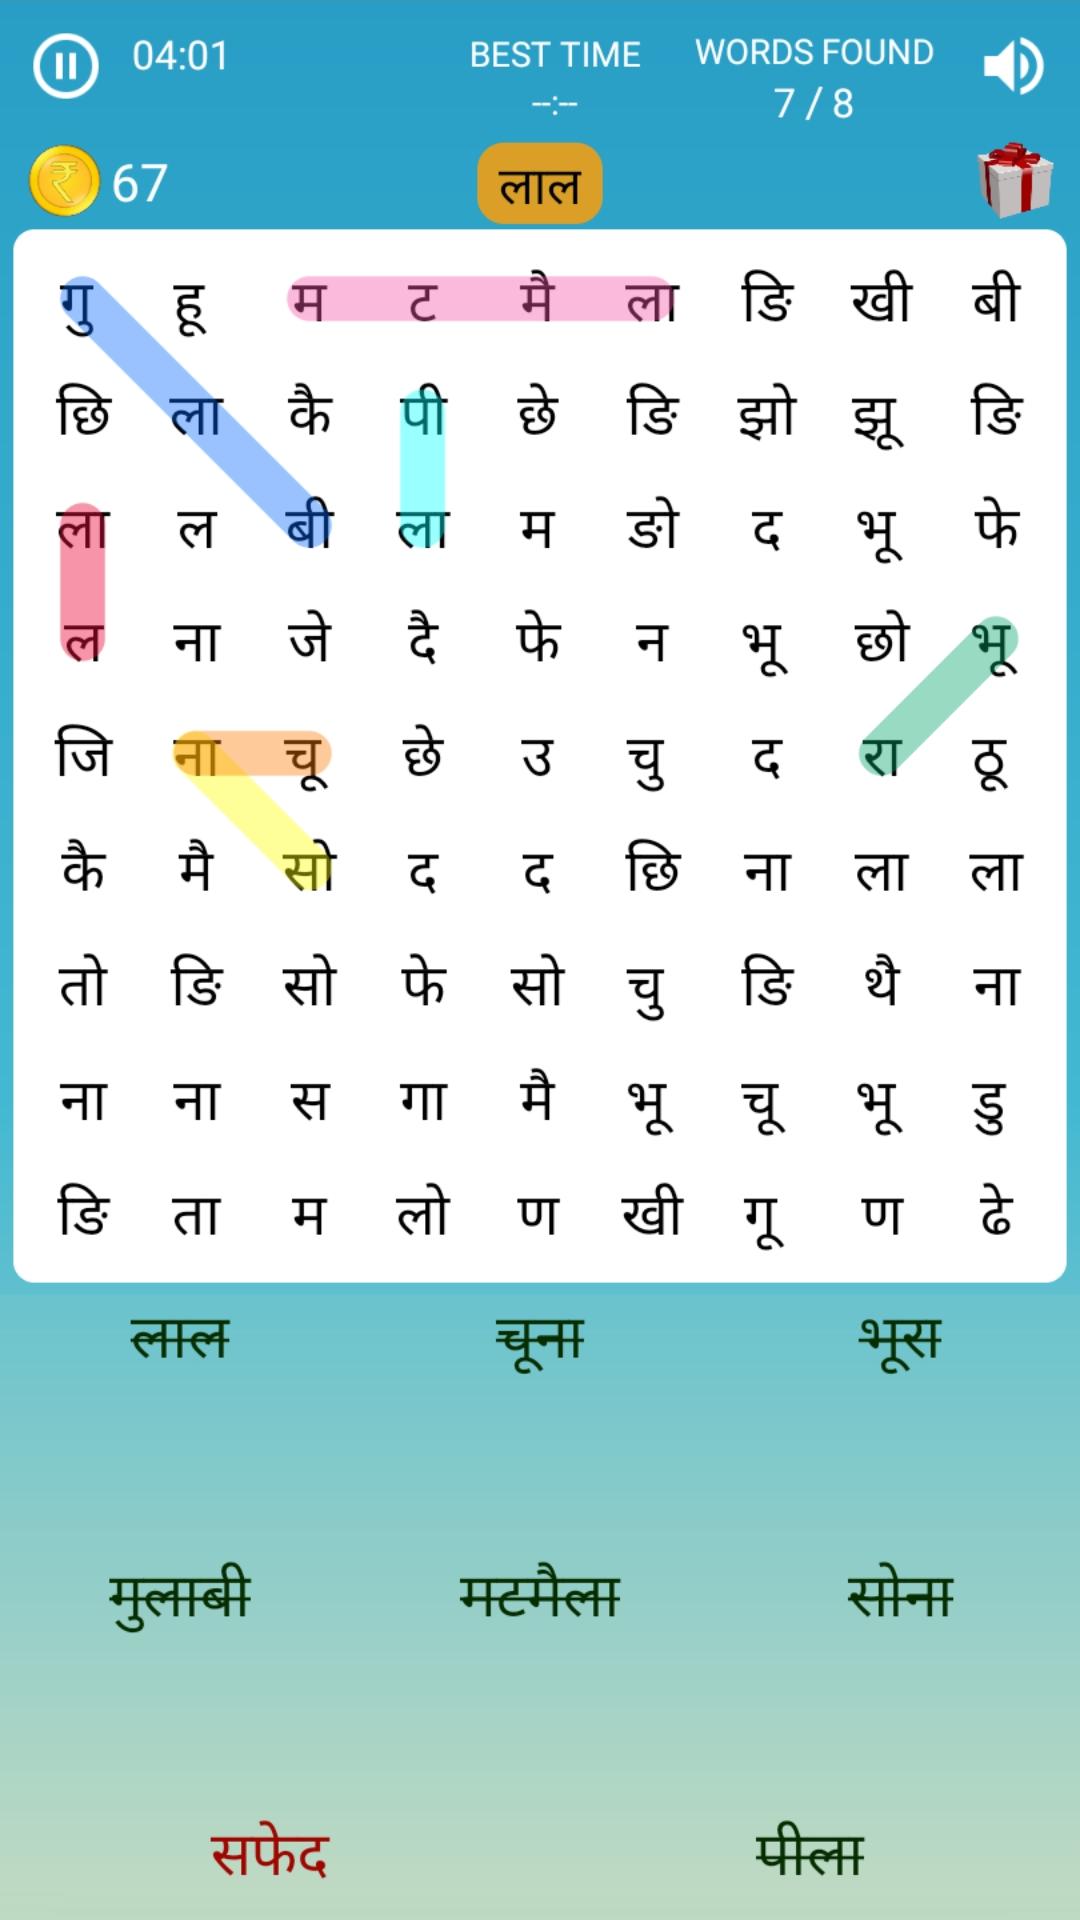 Hindi Word Search Game 2.2 Screenshot 1